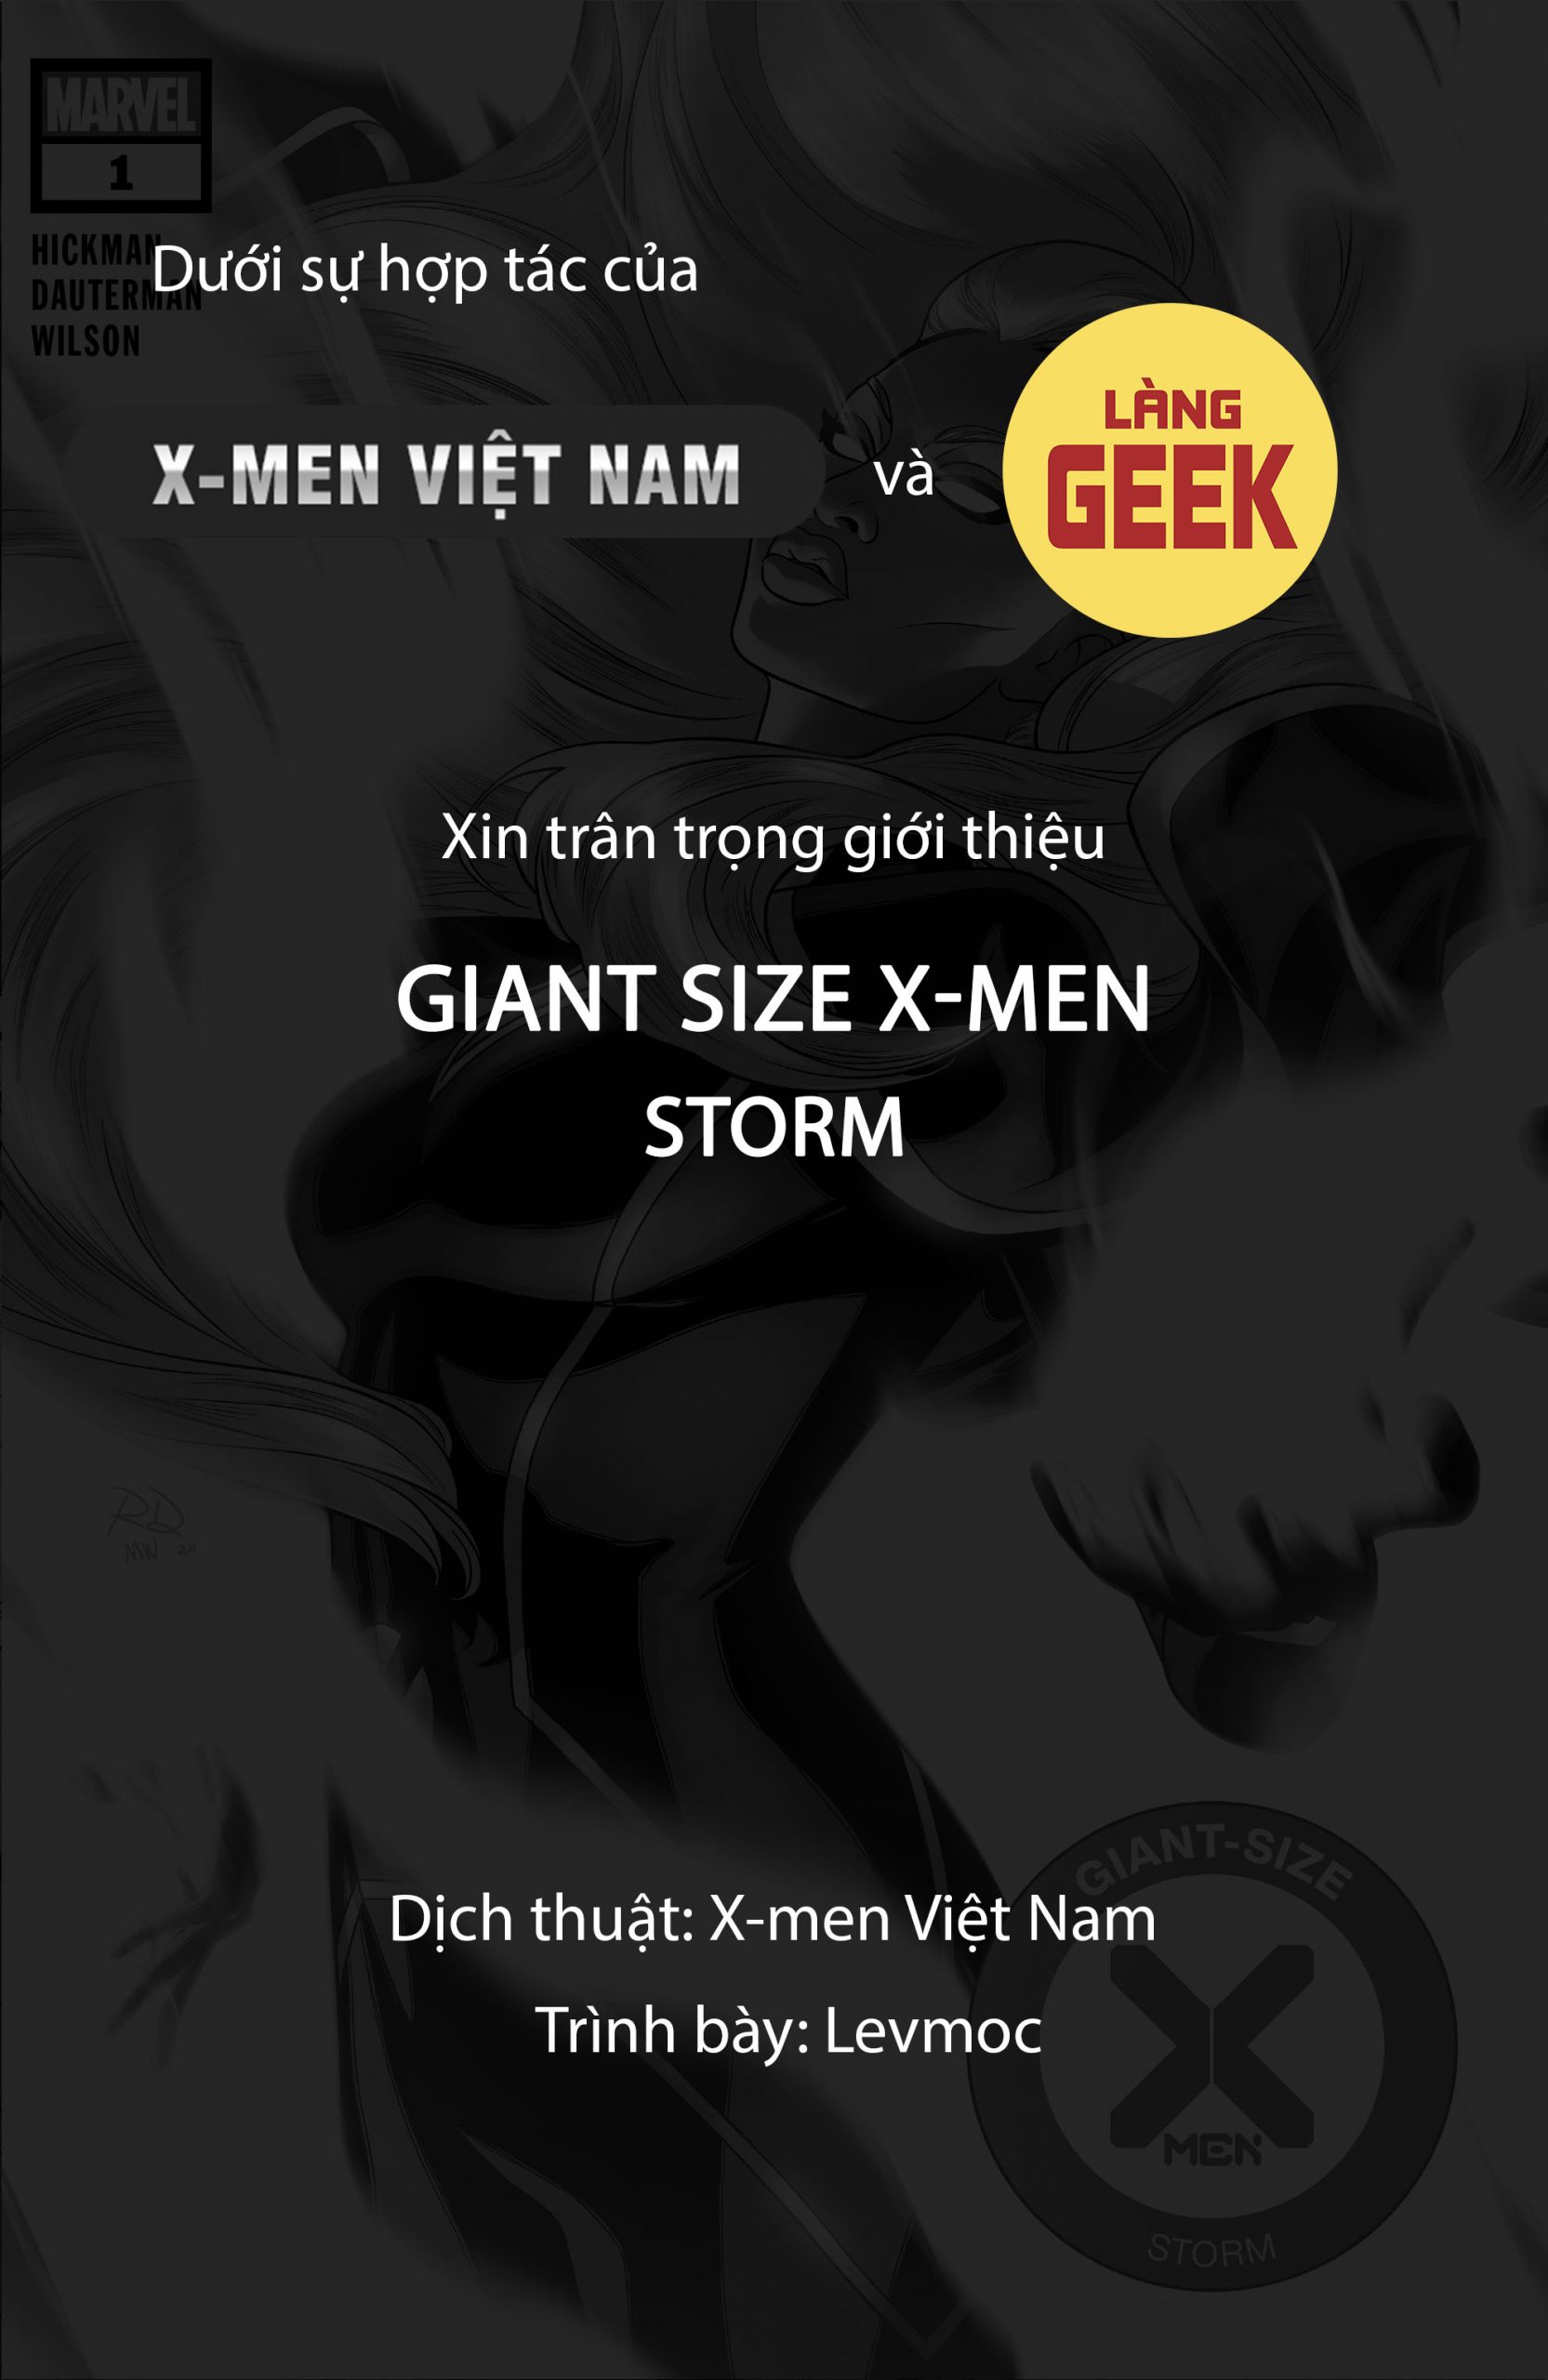 https://langgeek.net/wp-content/uploads/2022/01/Giant-Size-X-Men-Storm-2020-001-000-1-scaled.jpg